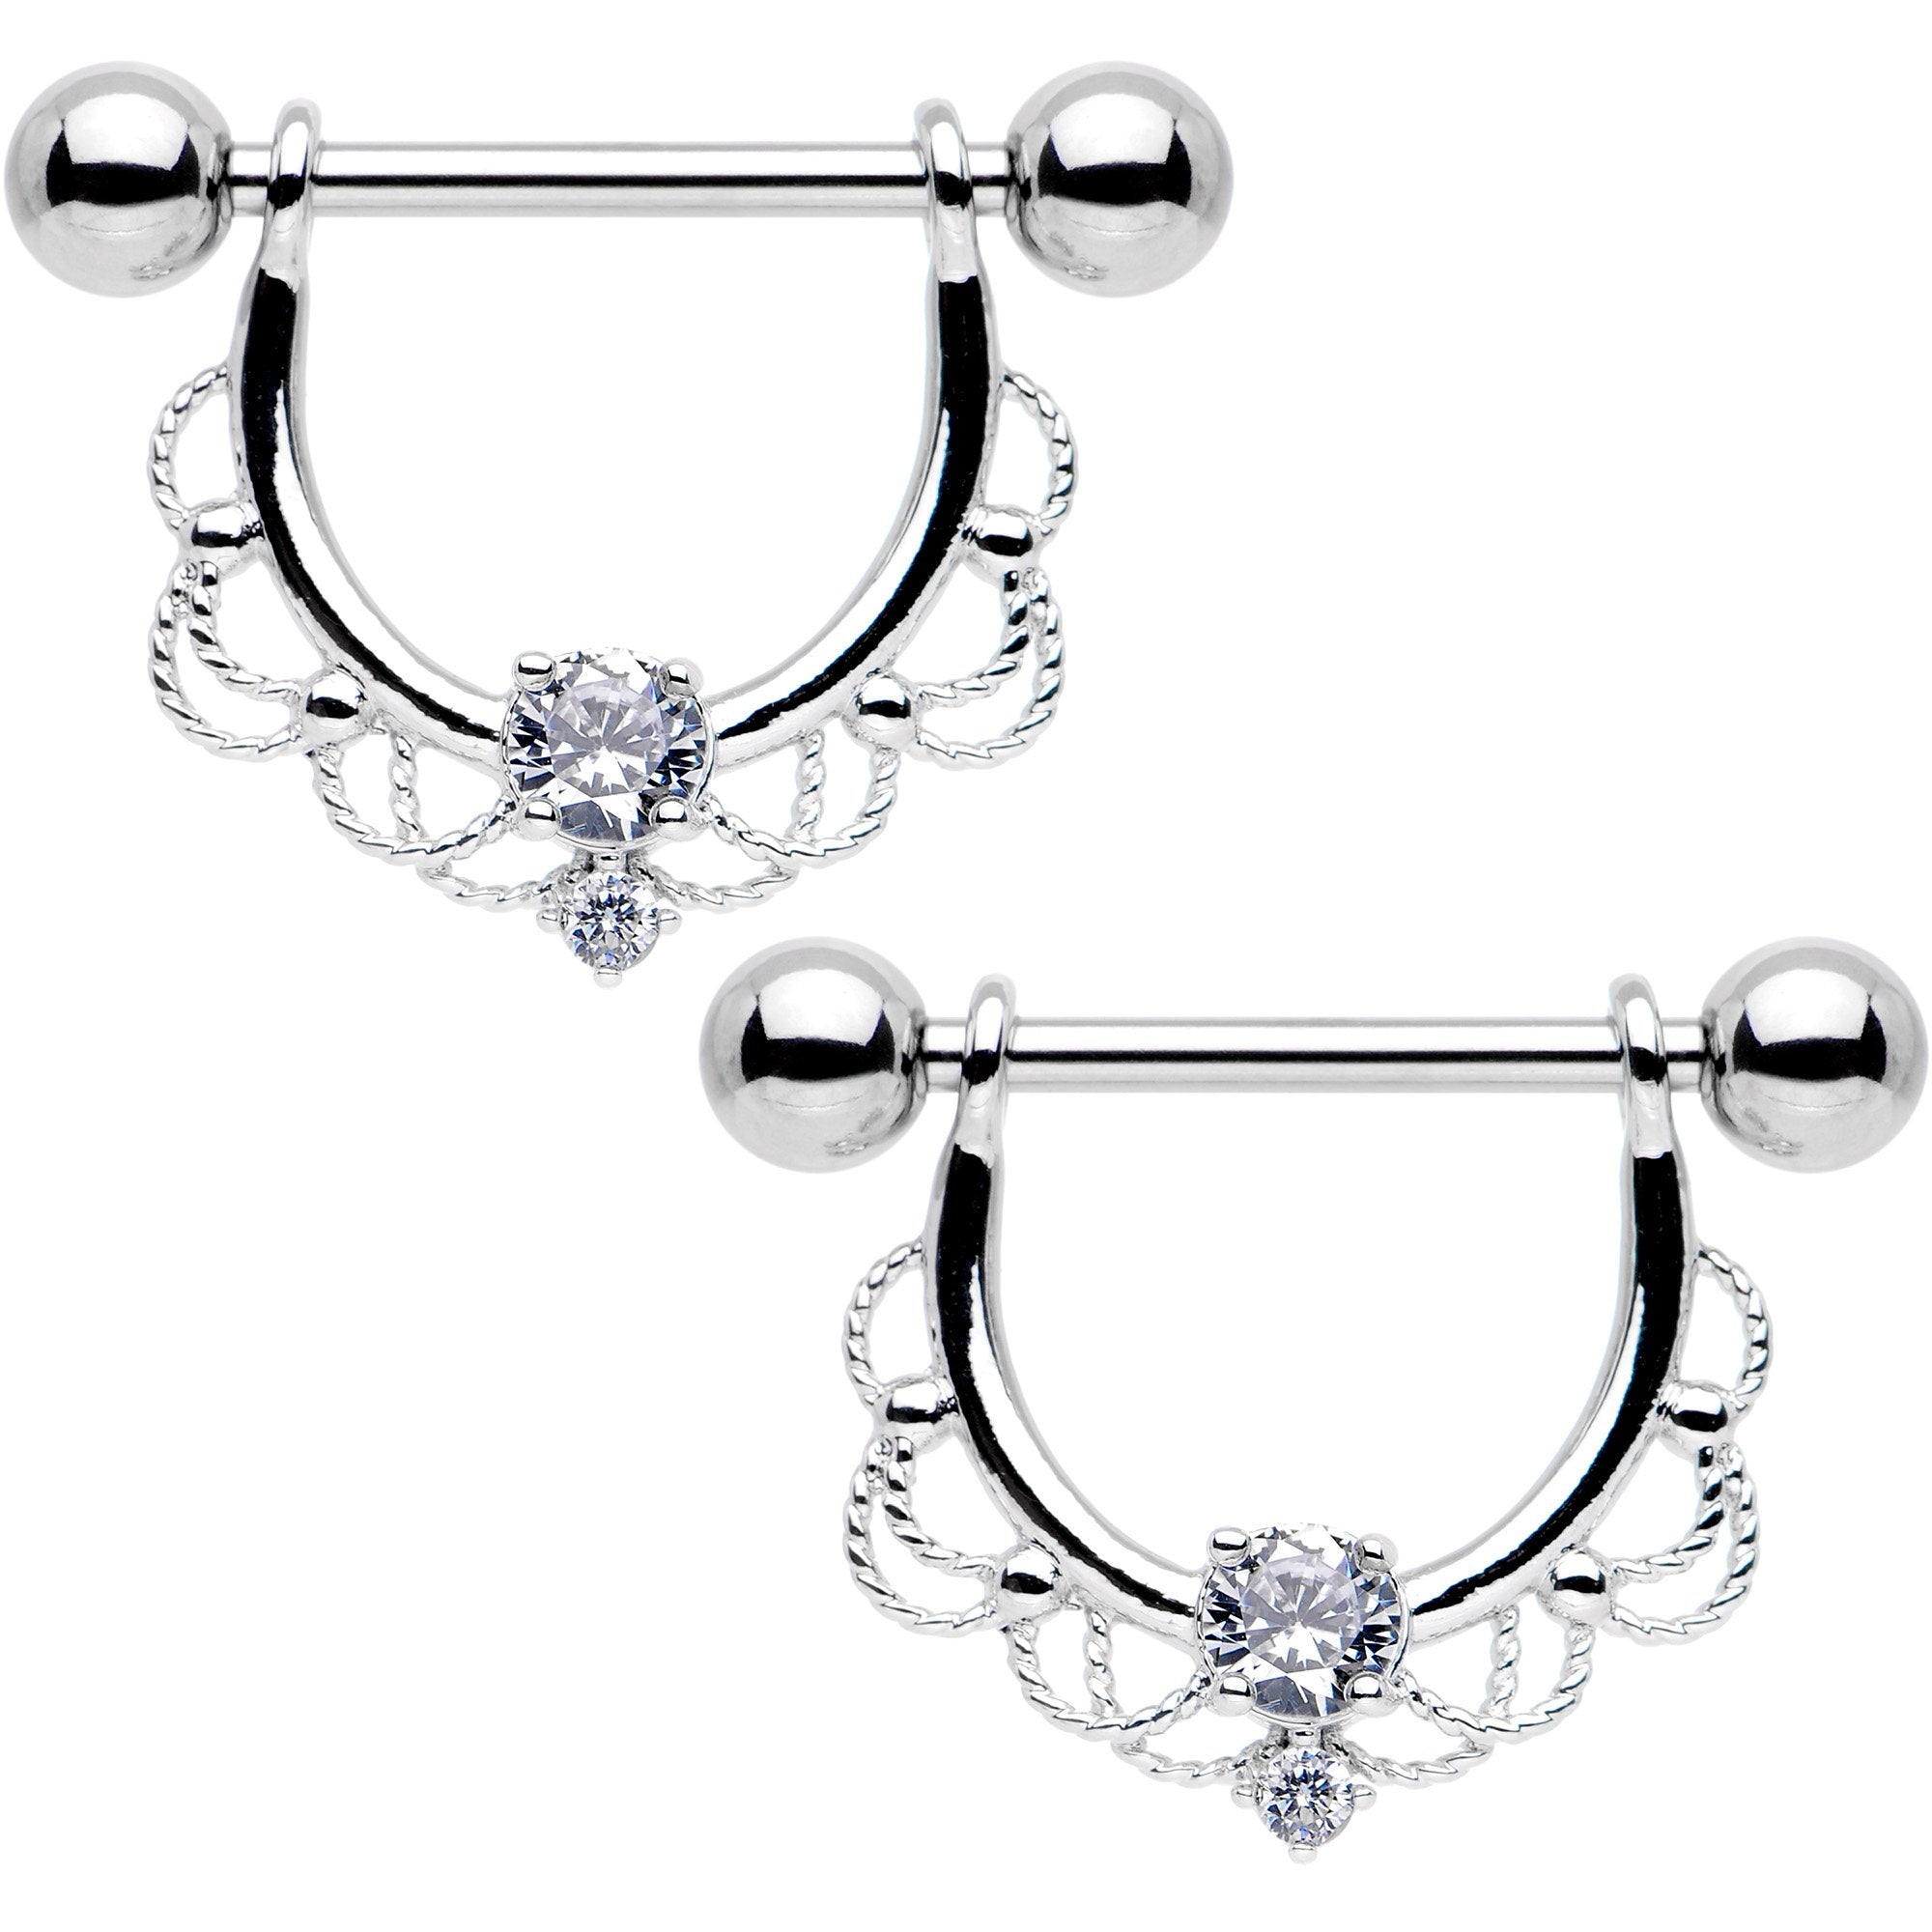 9/16 Clear CZ Gem Twin Spirits Barbell Nipple Ring Set